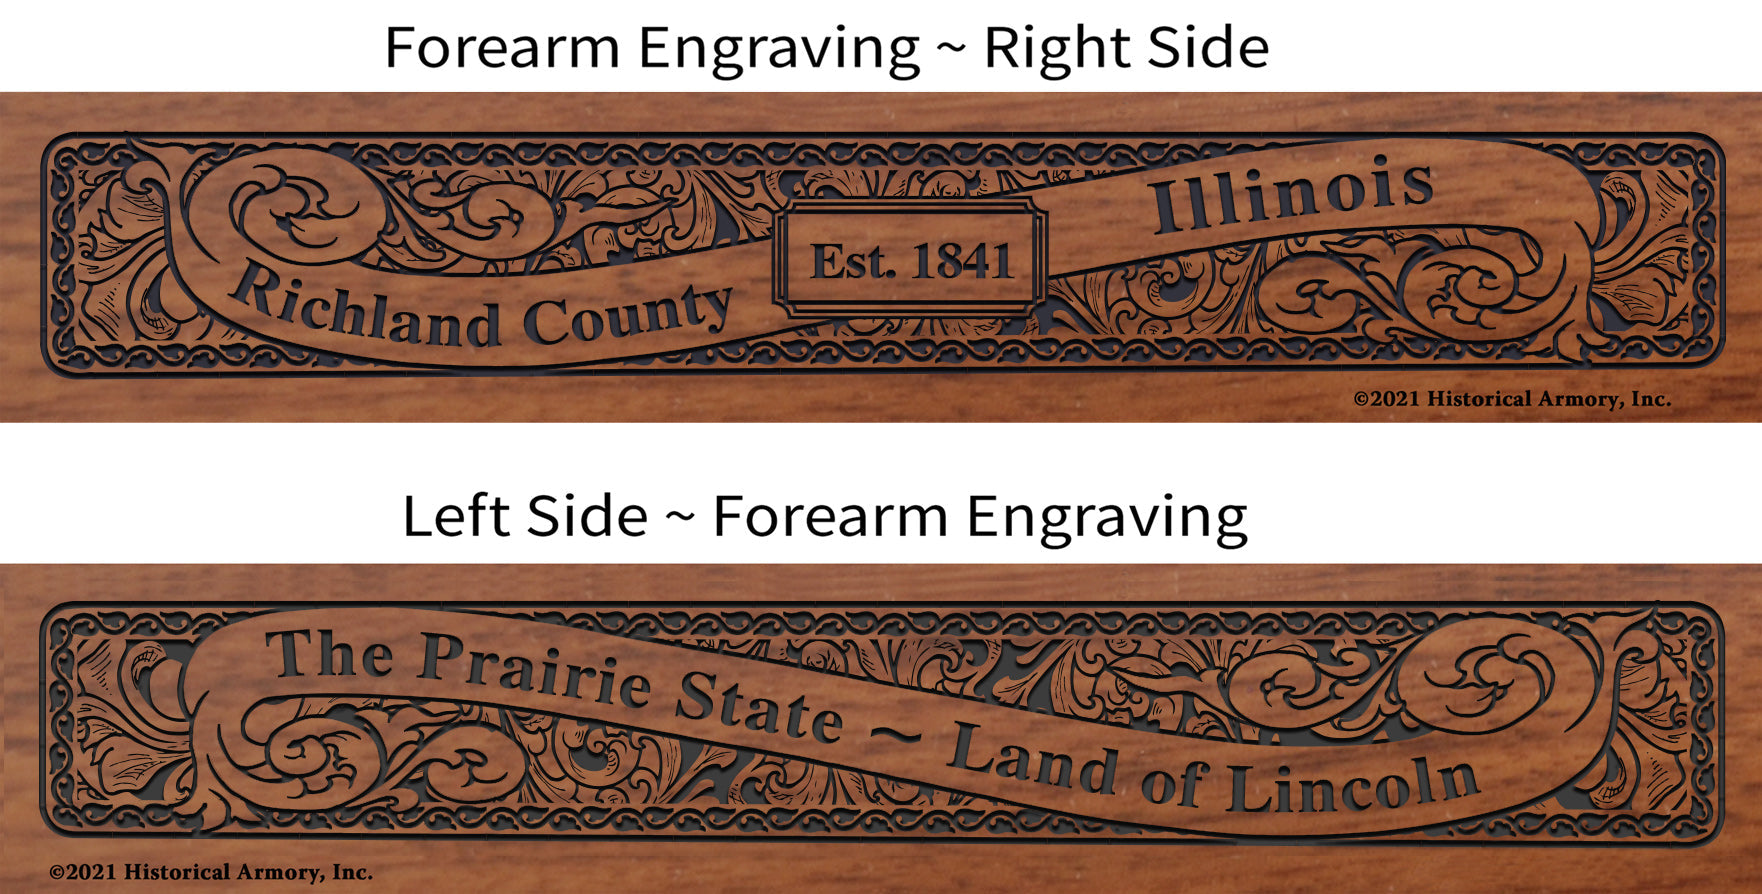 Richland County Illinois Establishment and Motto History Engraved Rifle Forearm